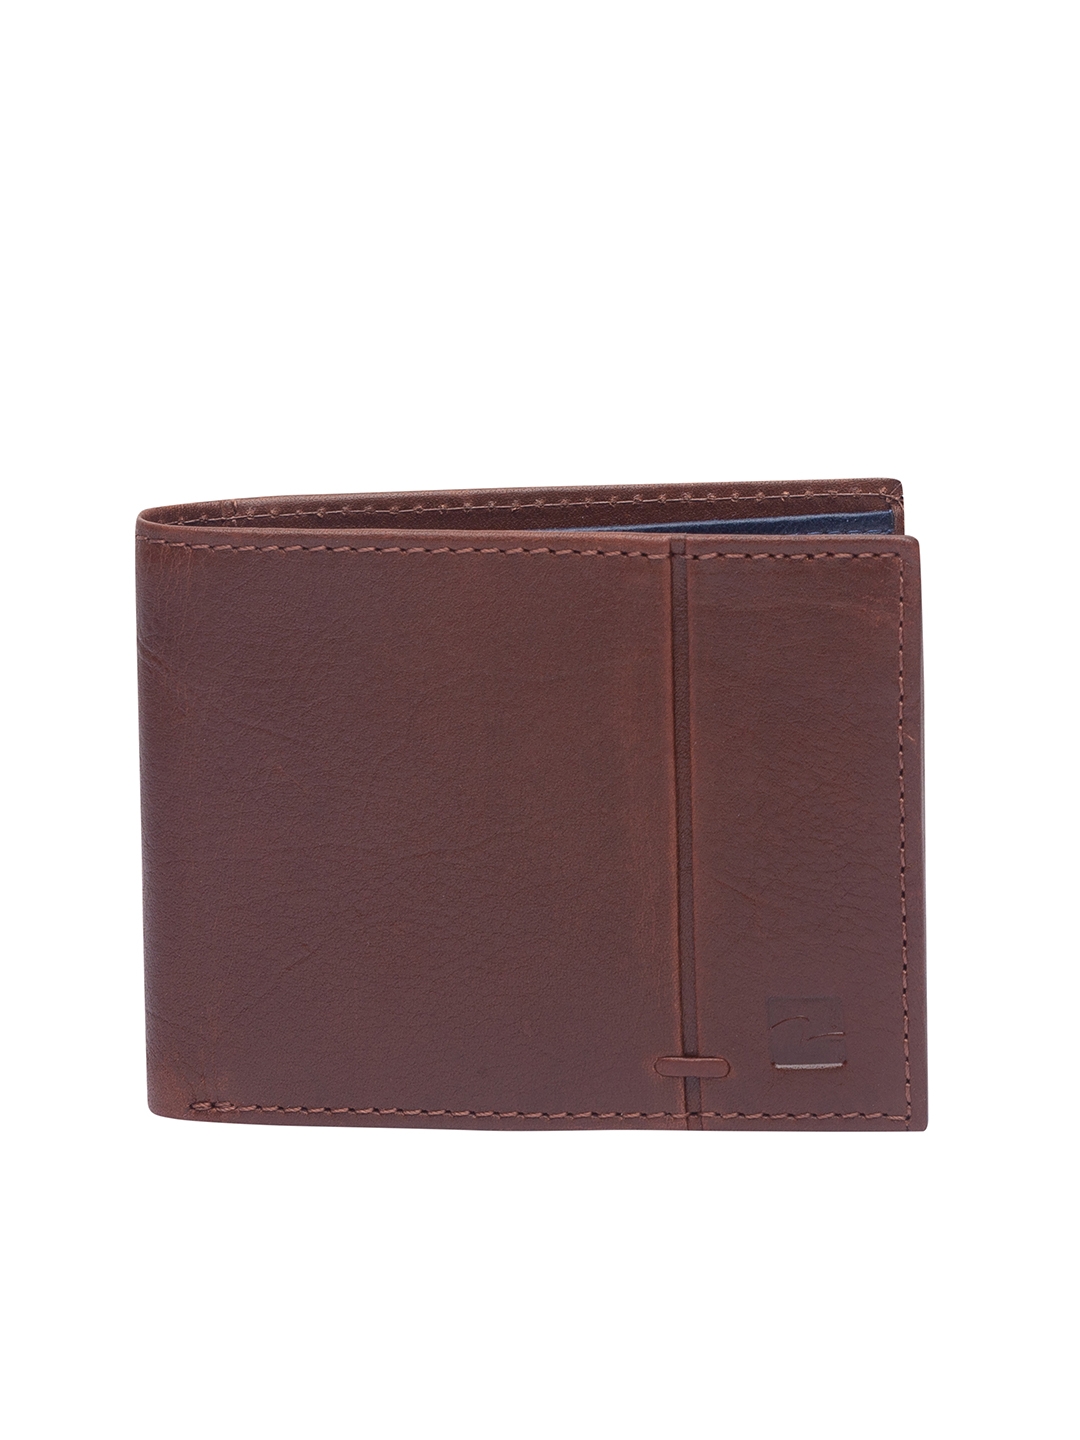 Spykar | Spykar Tan Genuine Leather Wallet